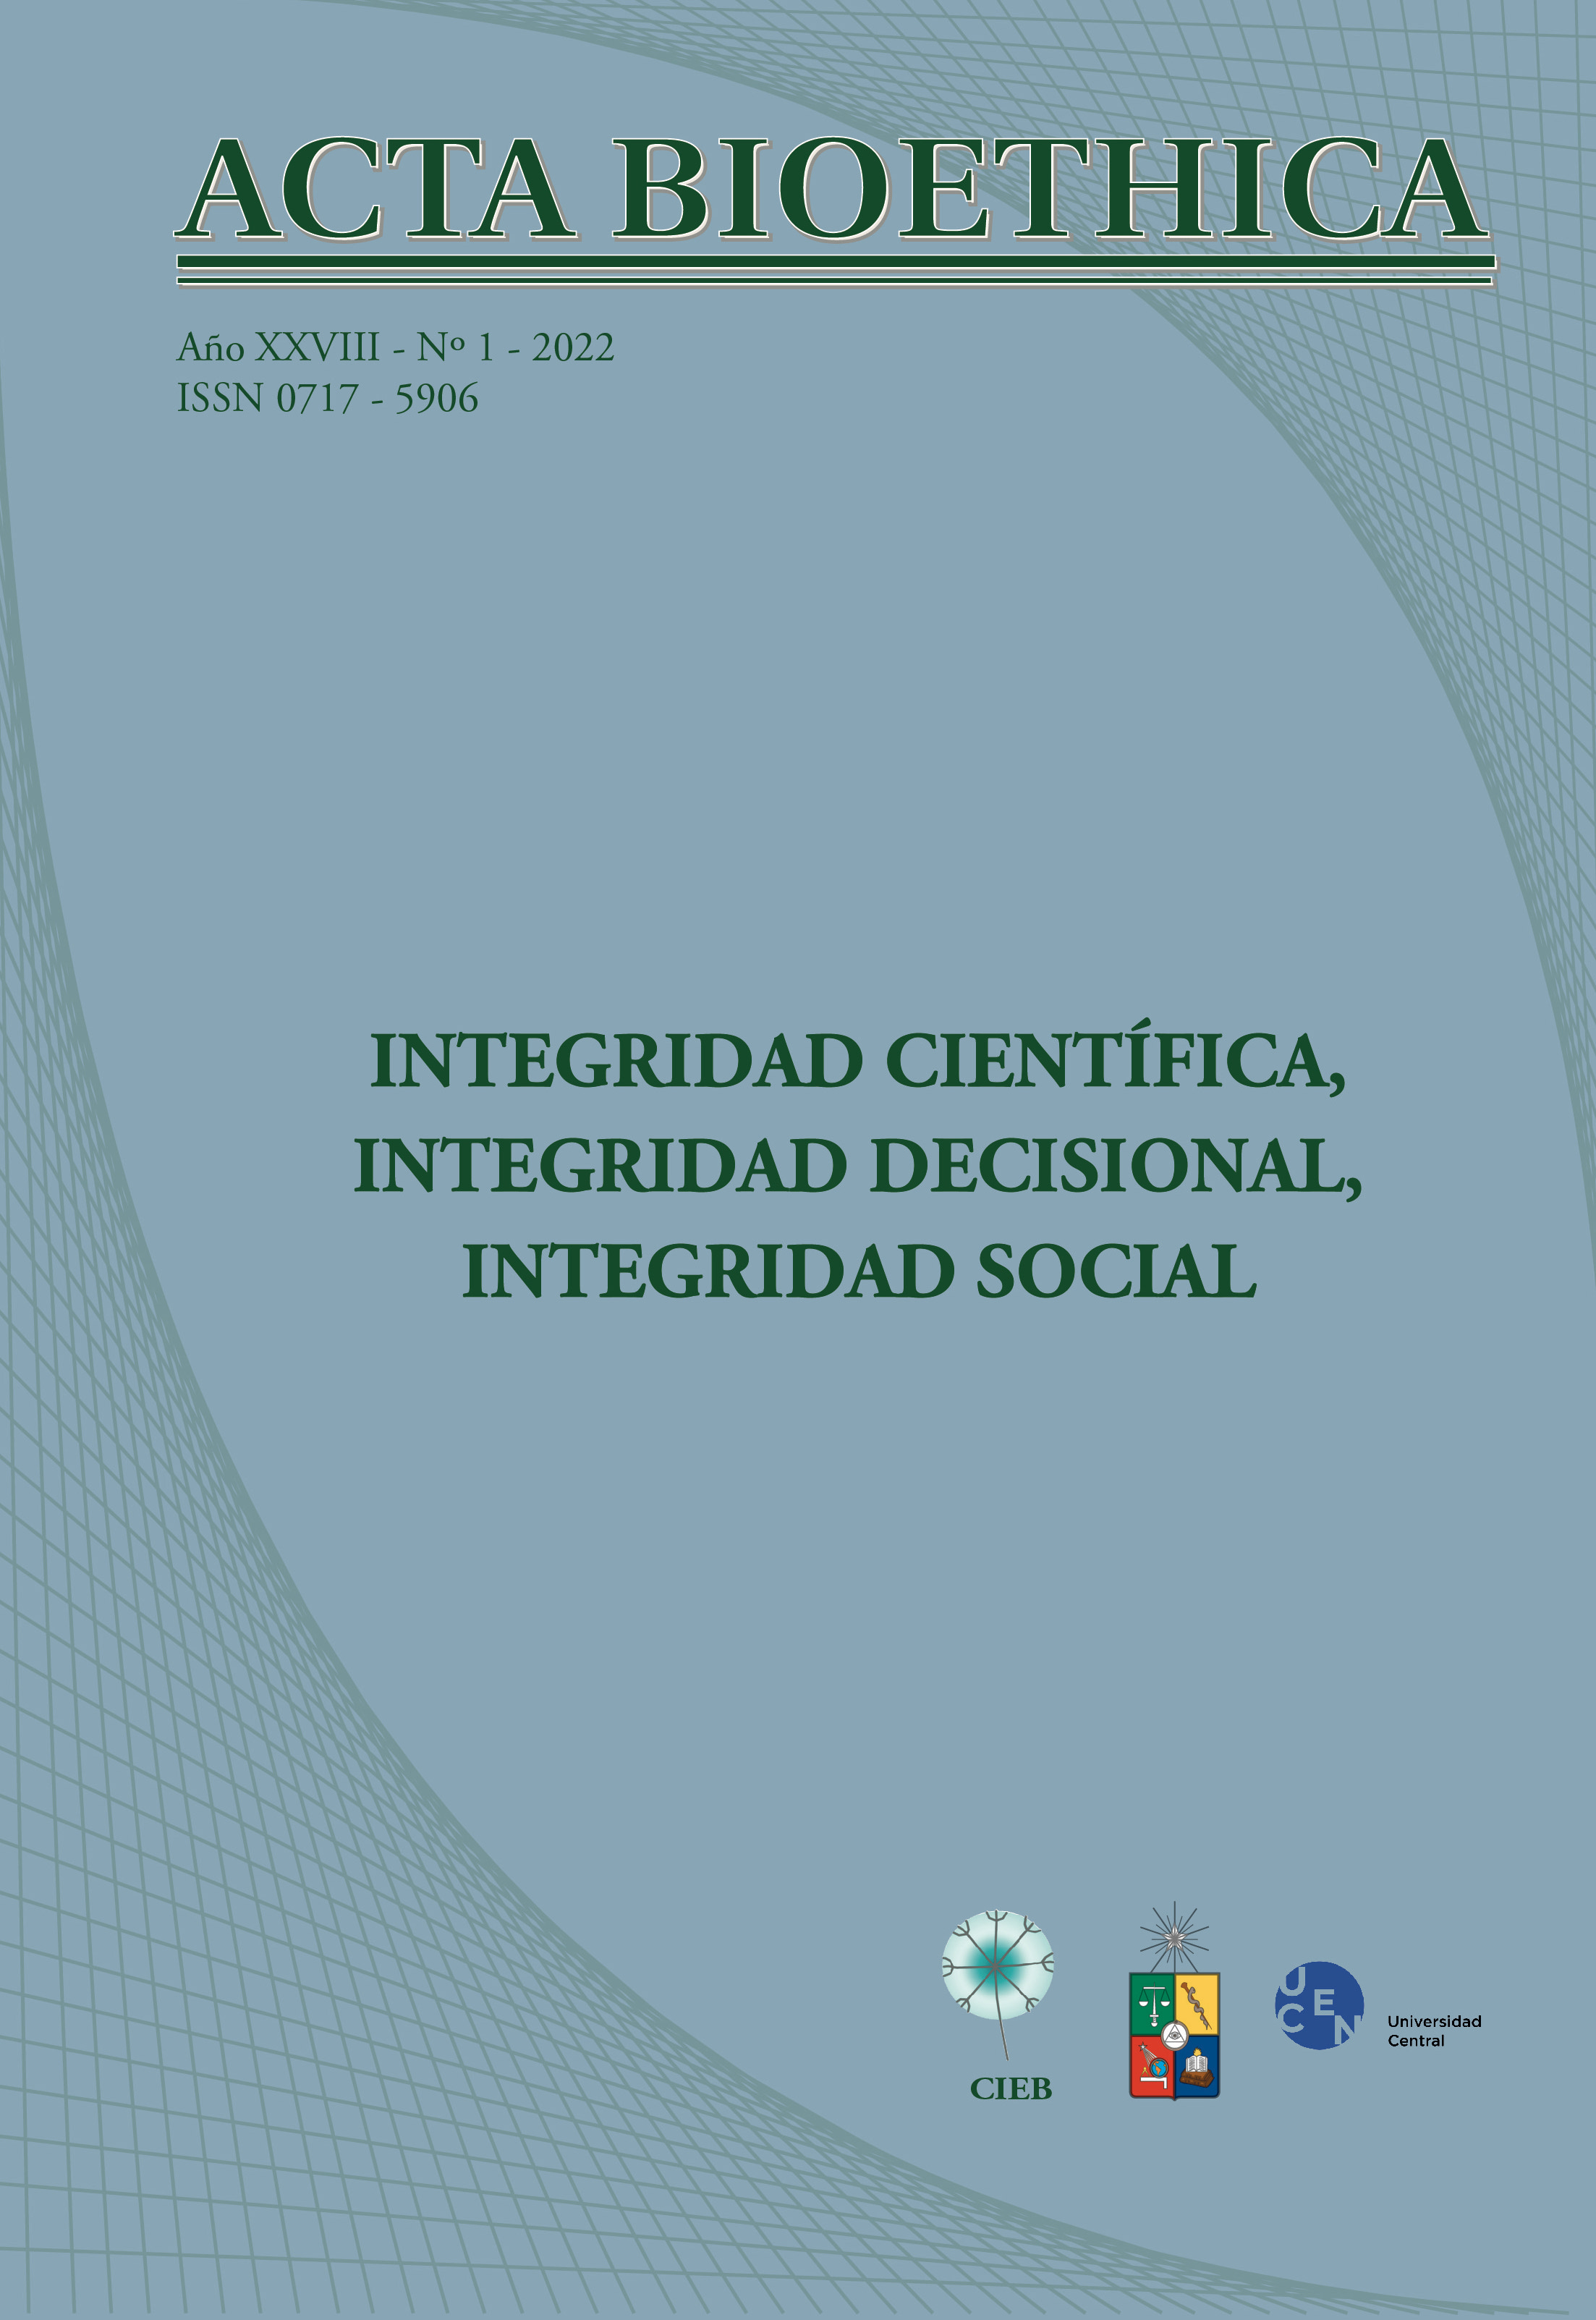 											Ver Vol. 28 Núm. 1 (2022): Integridad científica, integridad decisional, integridad social
										